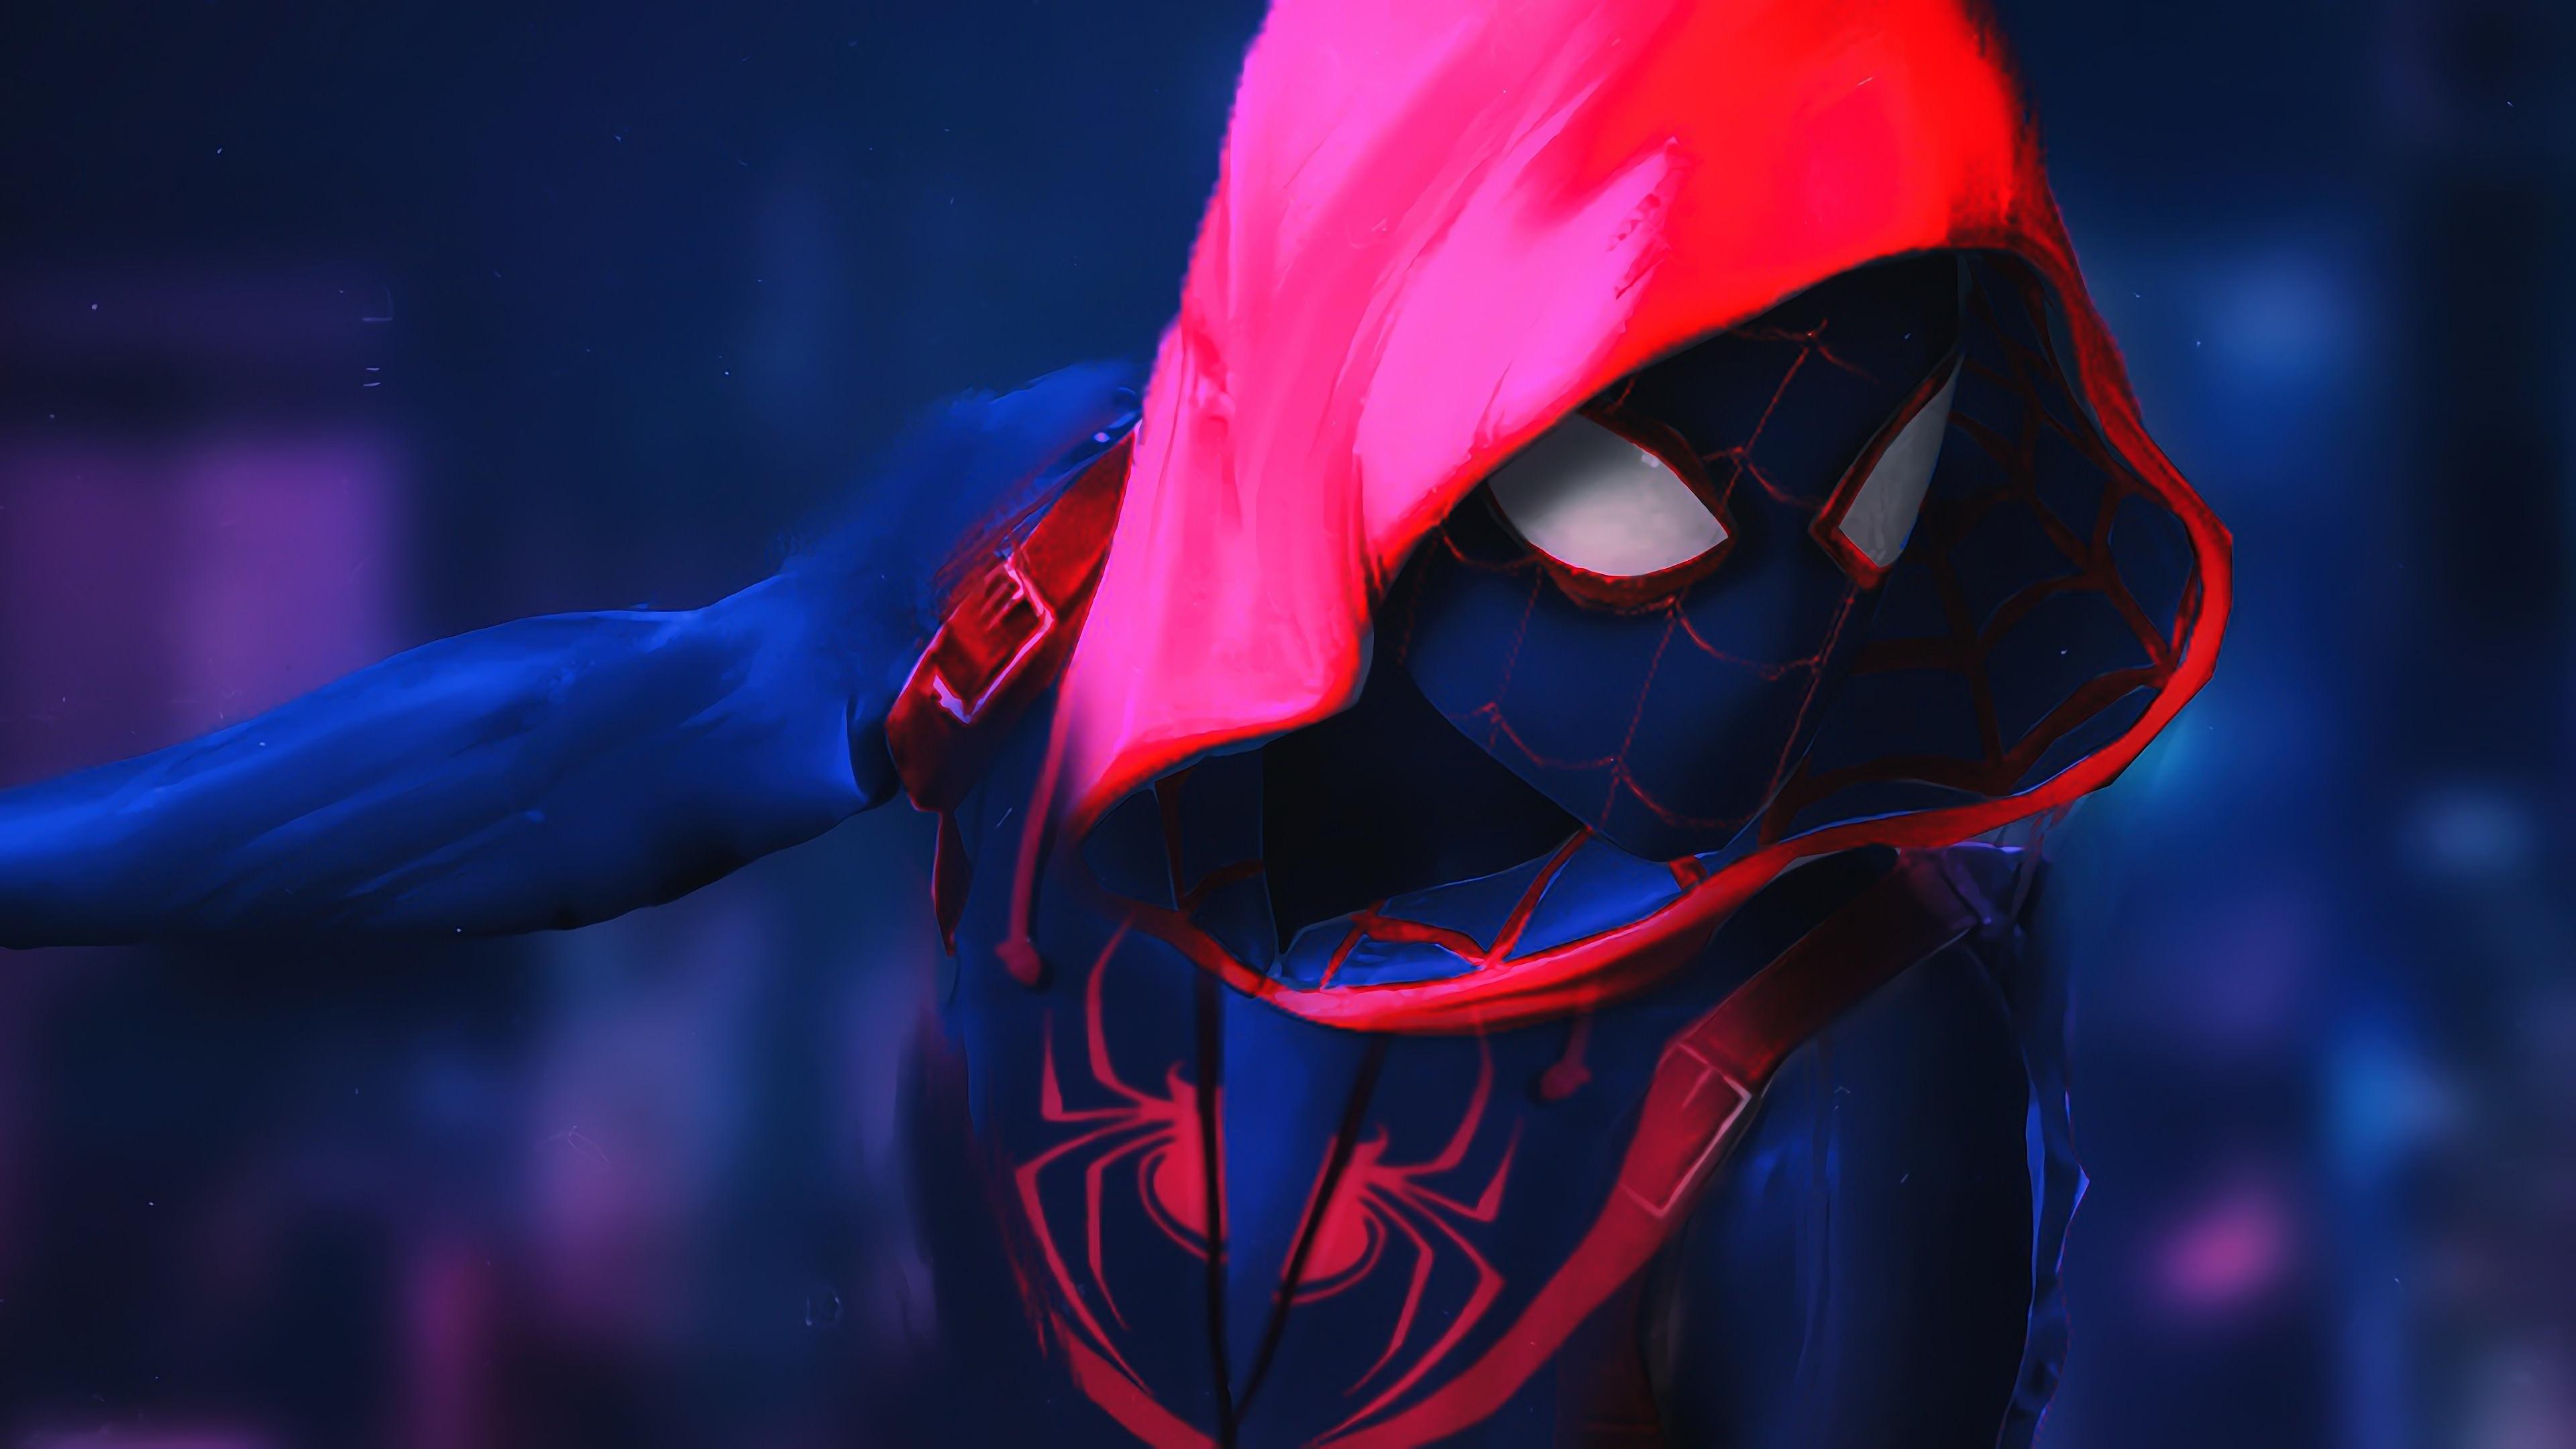 Spider Man Mask Wallpaper Free Spider Man Mask Background